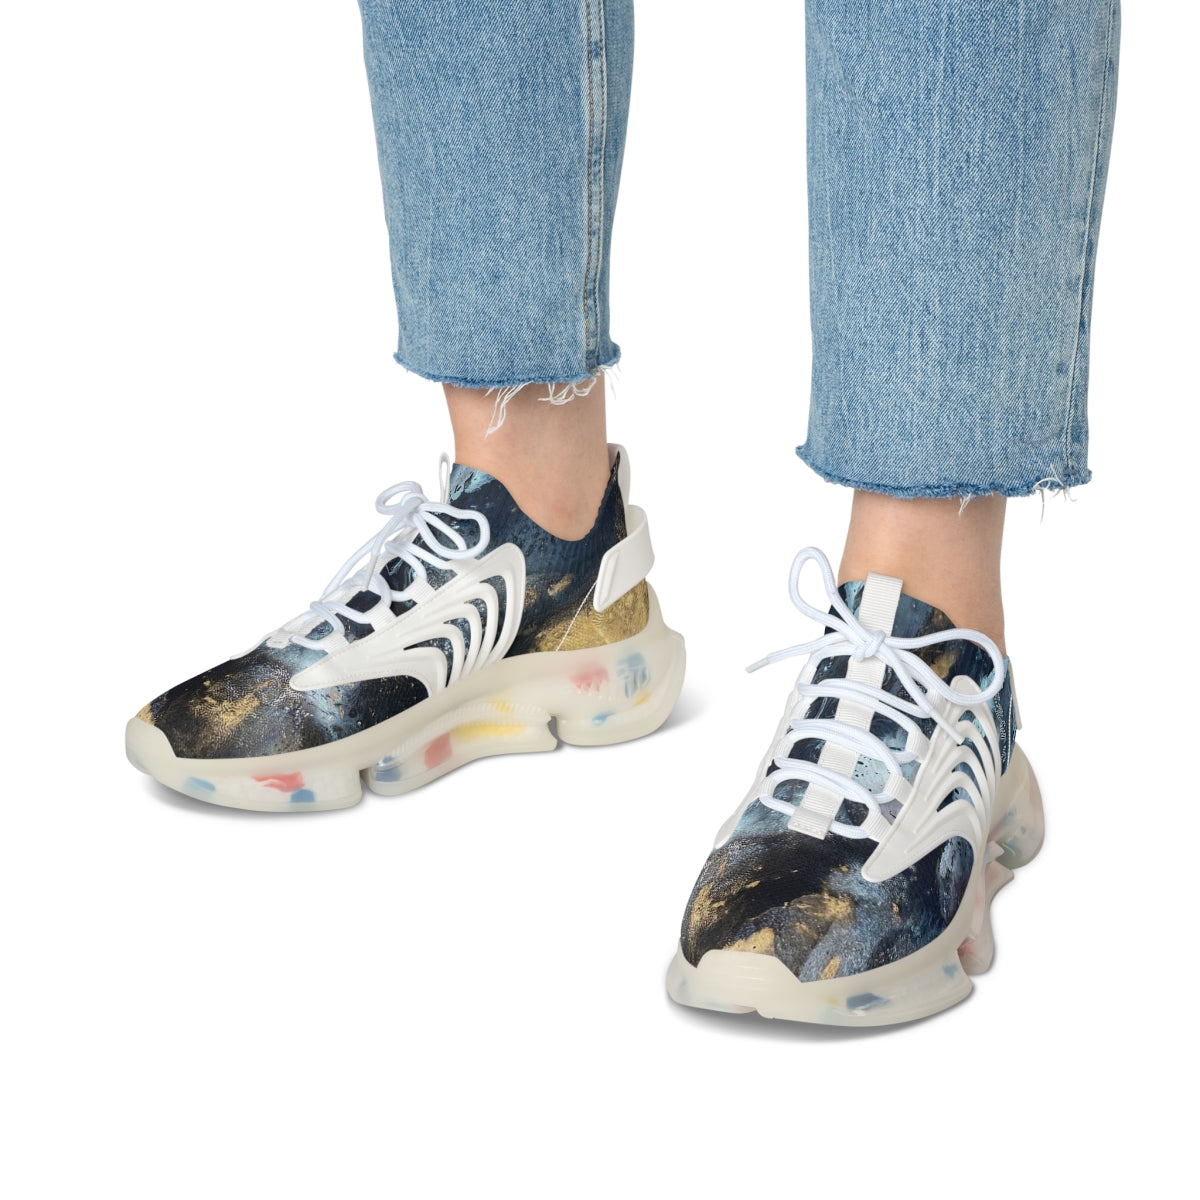 Mesh-Sneaker für Damen – Design in Aqua und Gold 